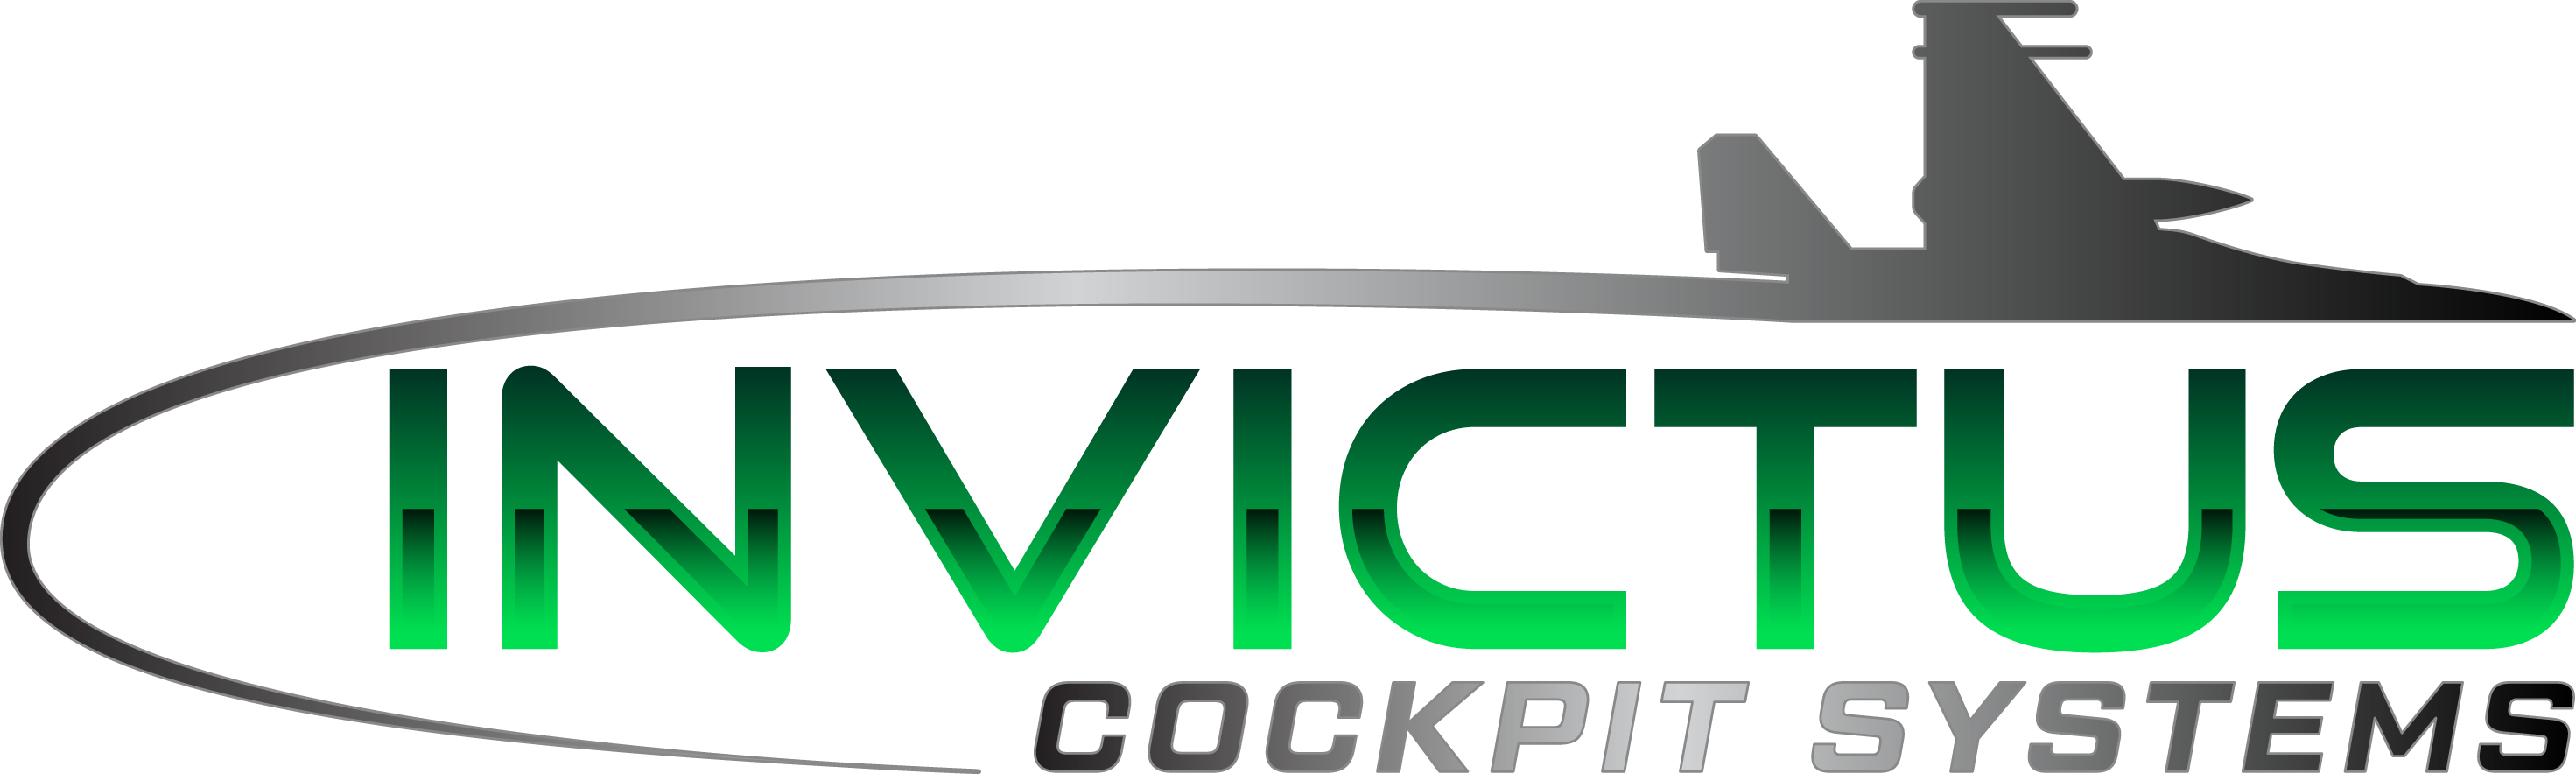 Invictus Cockpit Systems